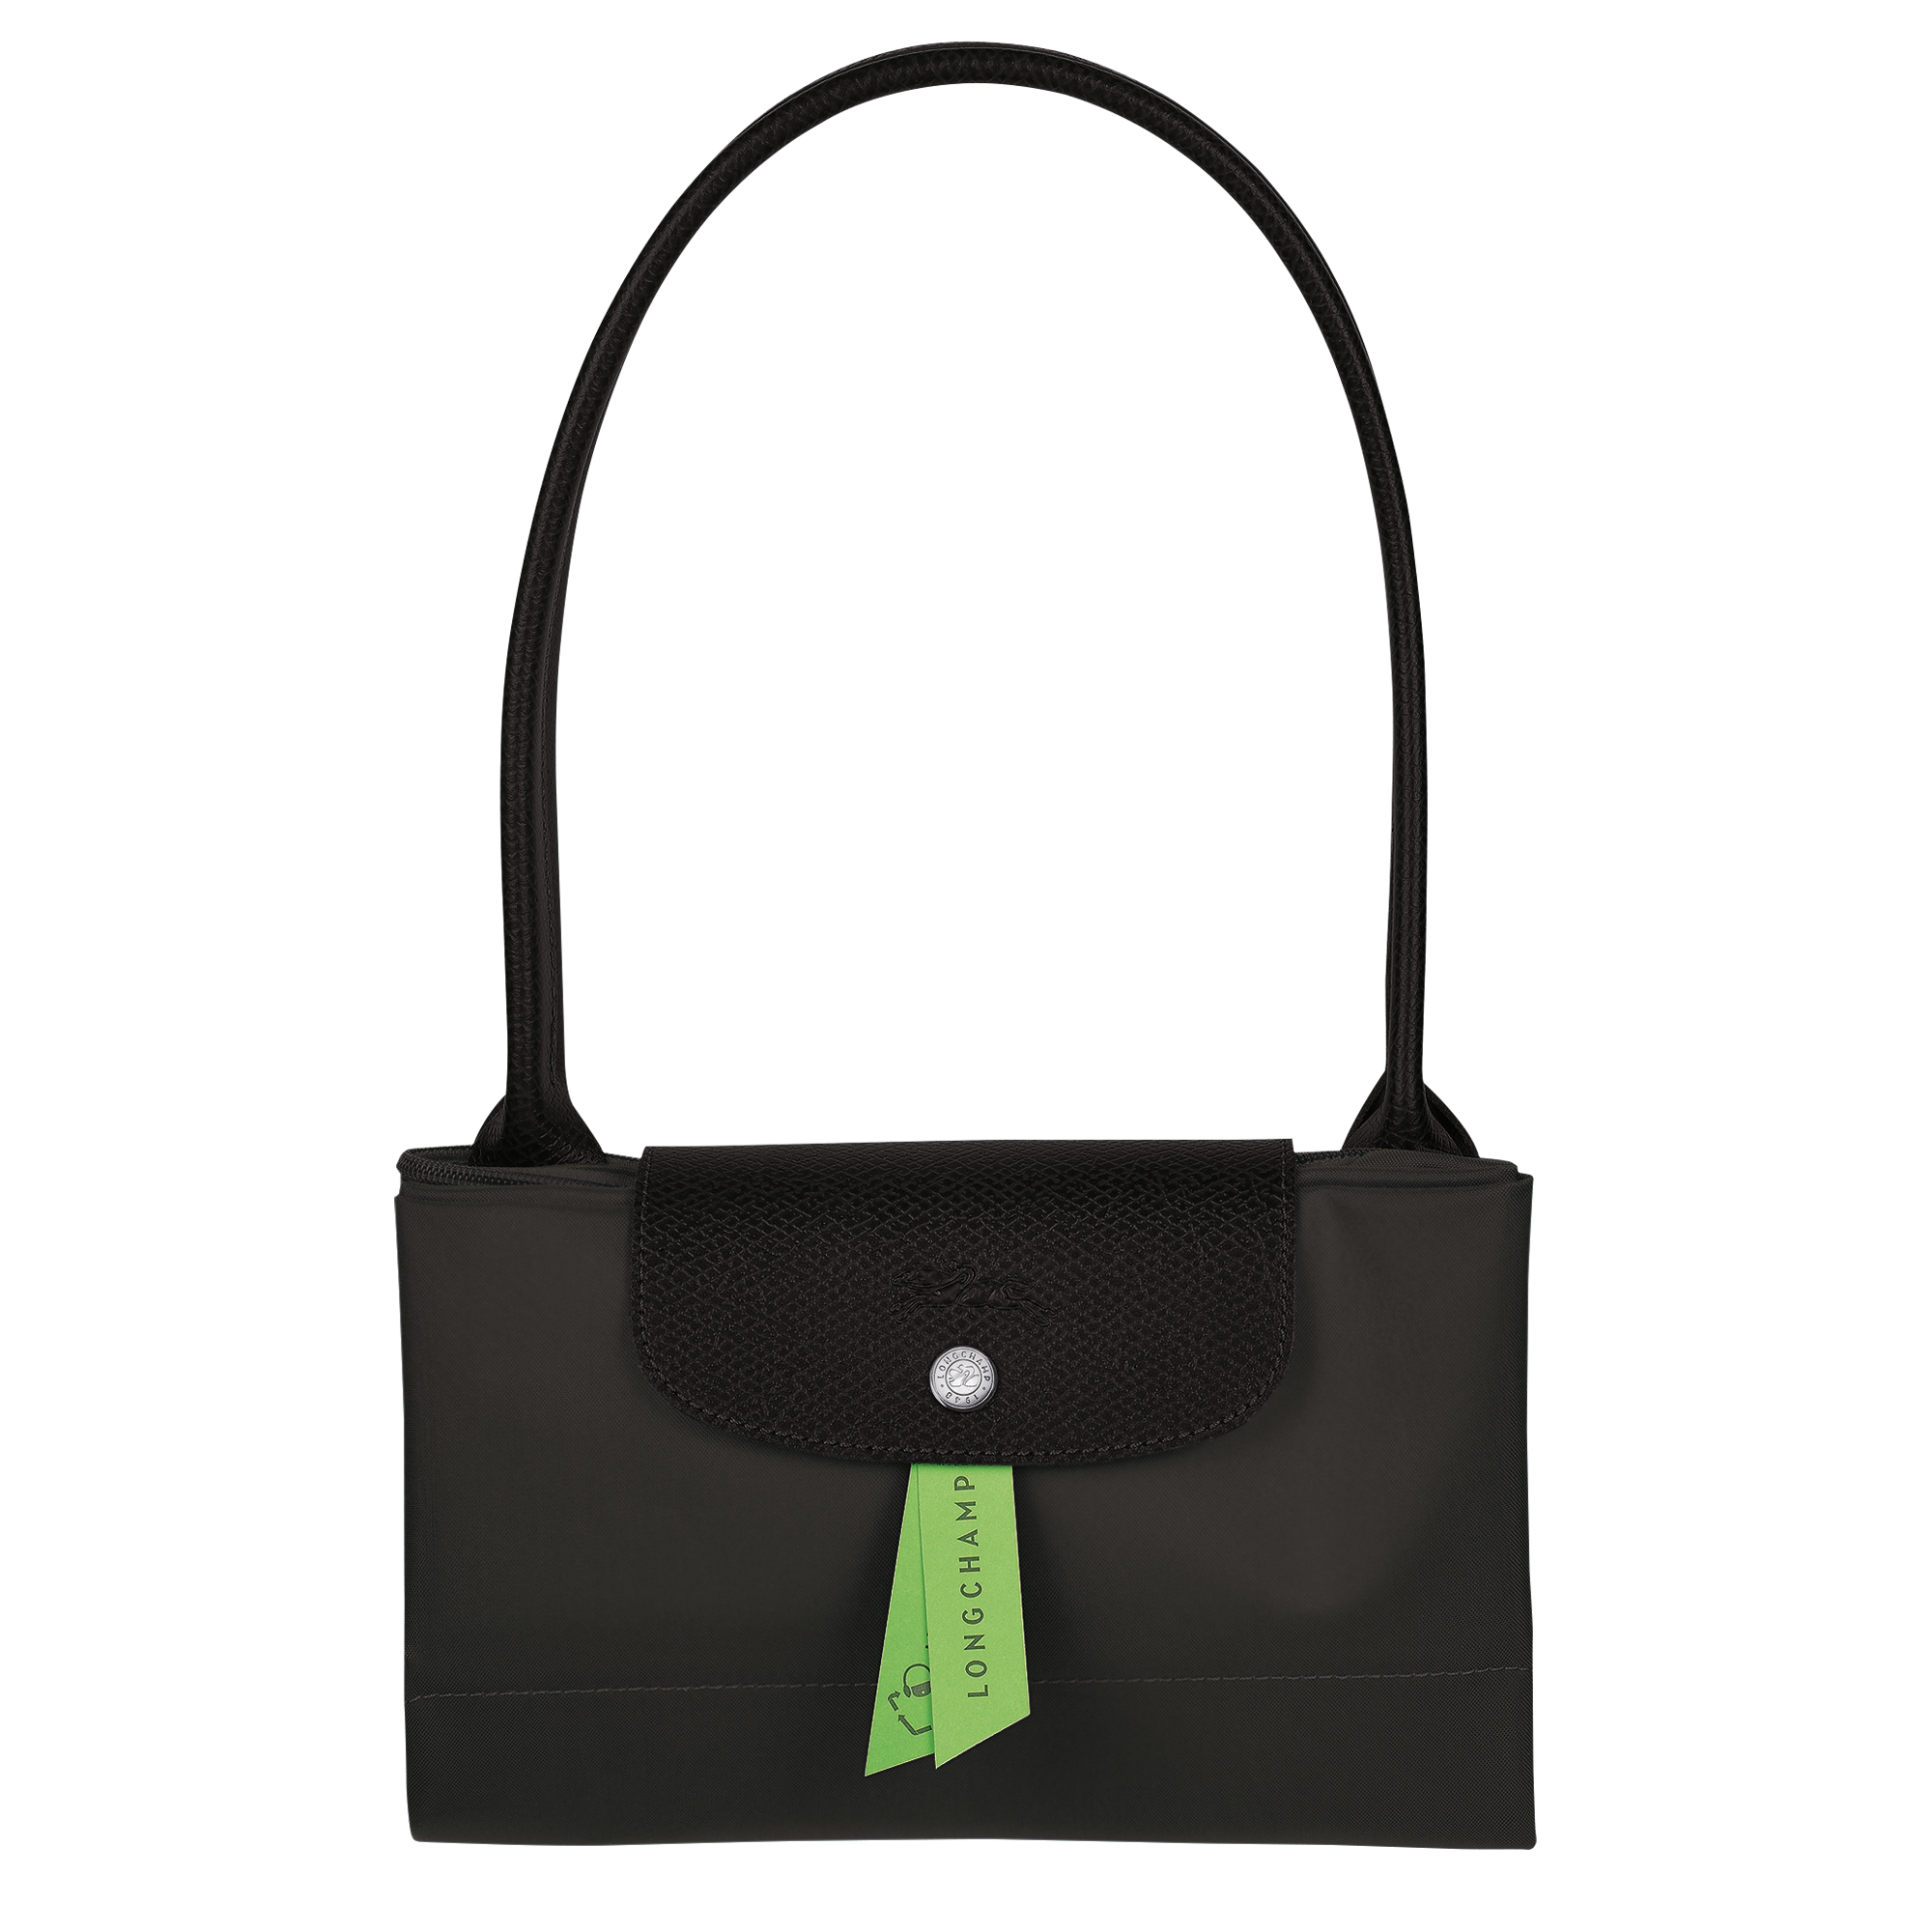 Le Pliage Green Tote bag L, Black